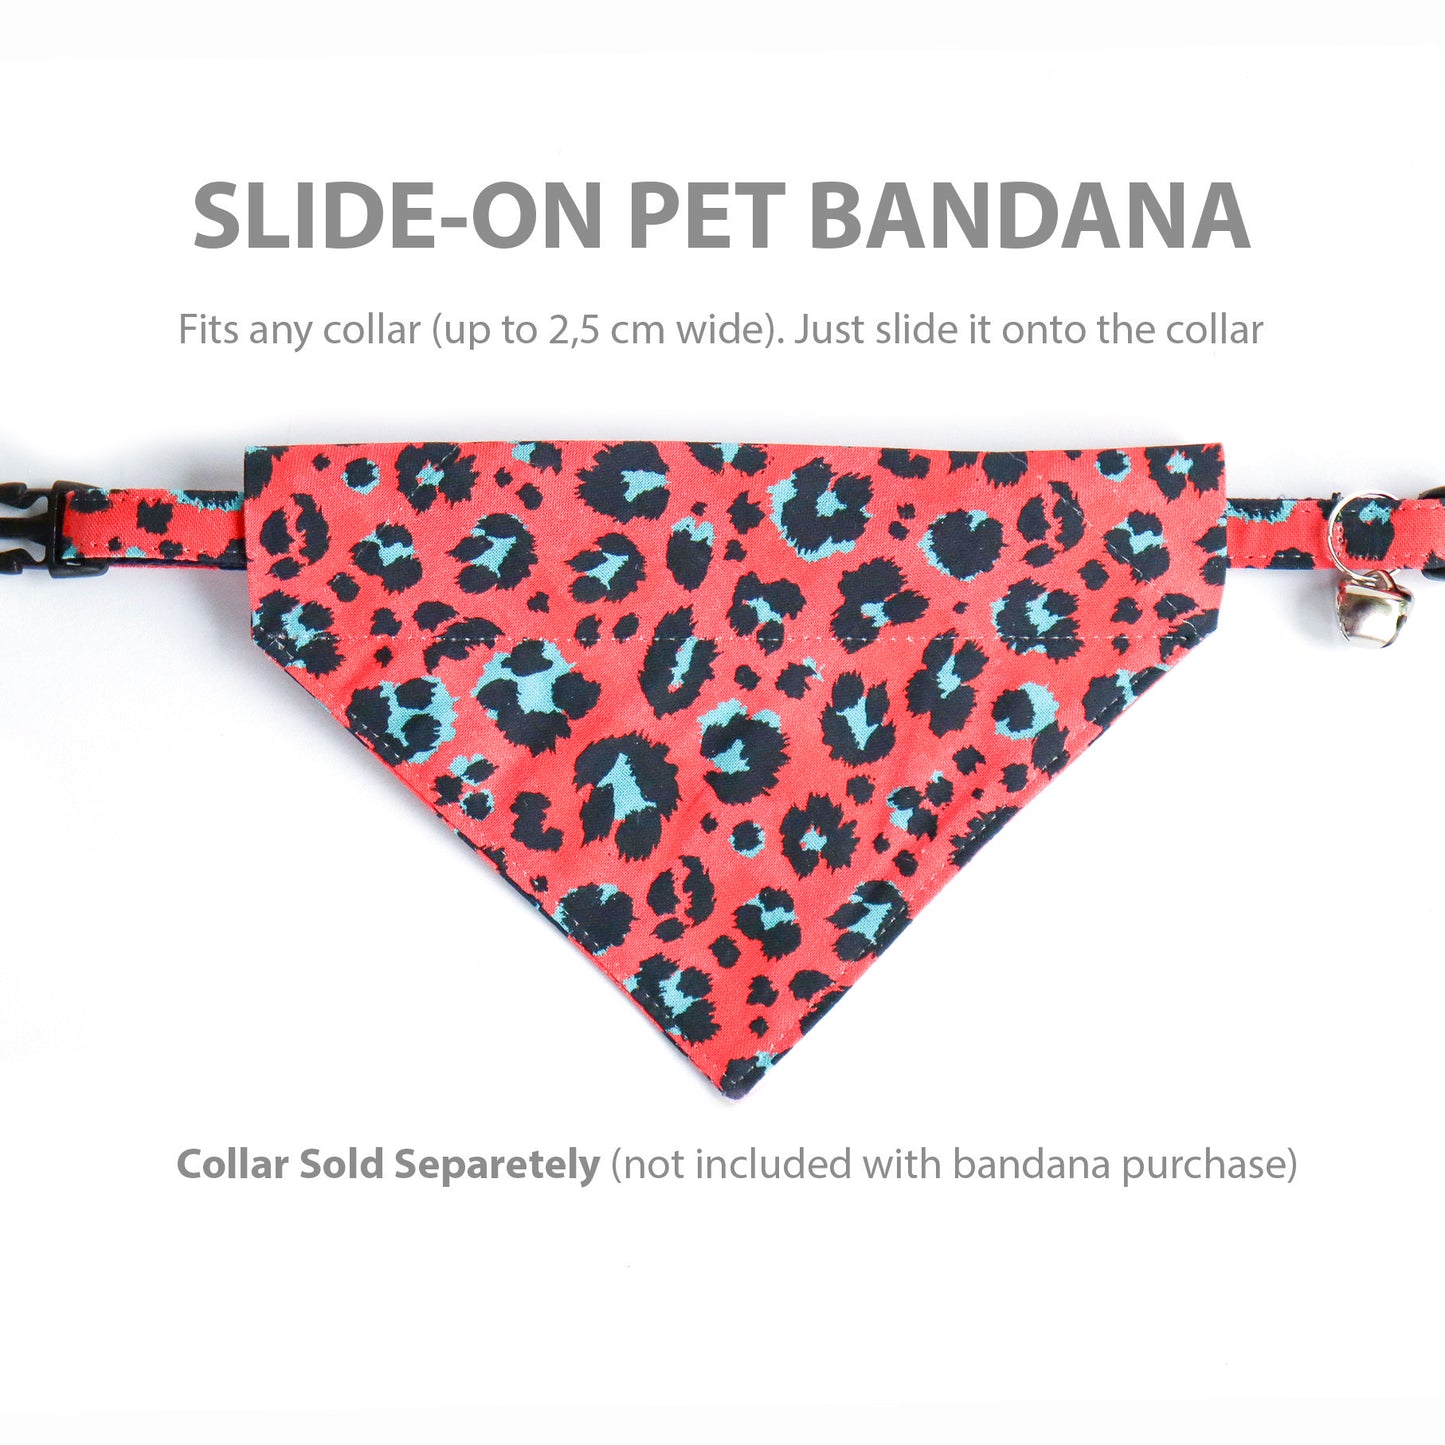 Pet Bandana - "Pink Leopard" - Bandana for Cat, Small Dog, Little Pet / Wedding, Winter, Fall, Summer / Slide-on Bandana